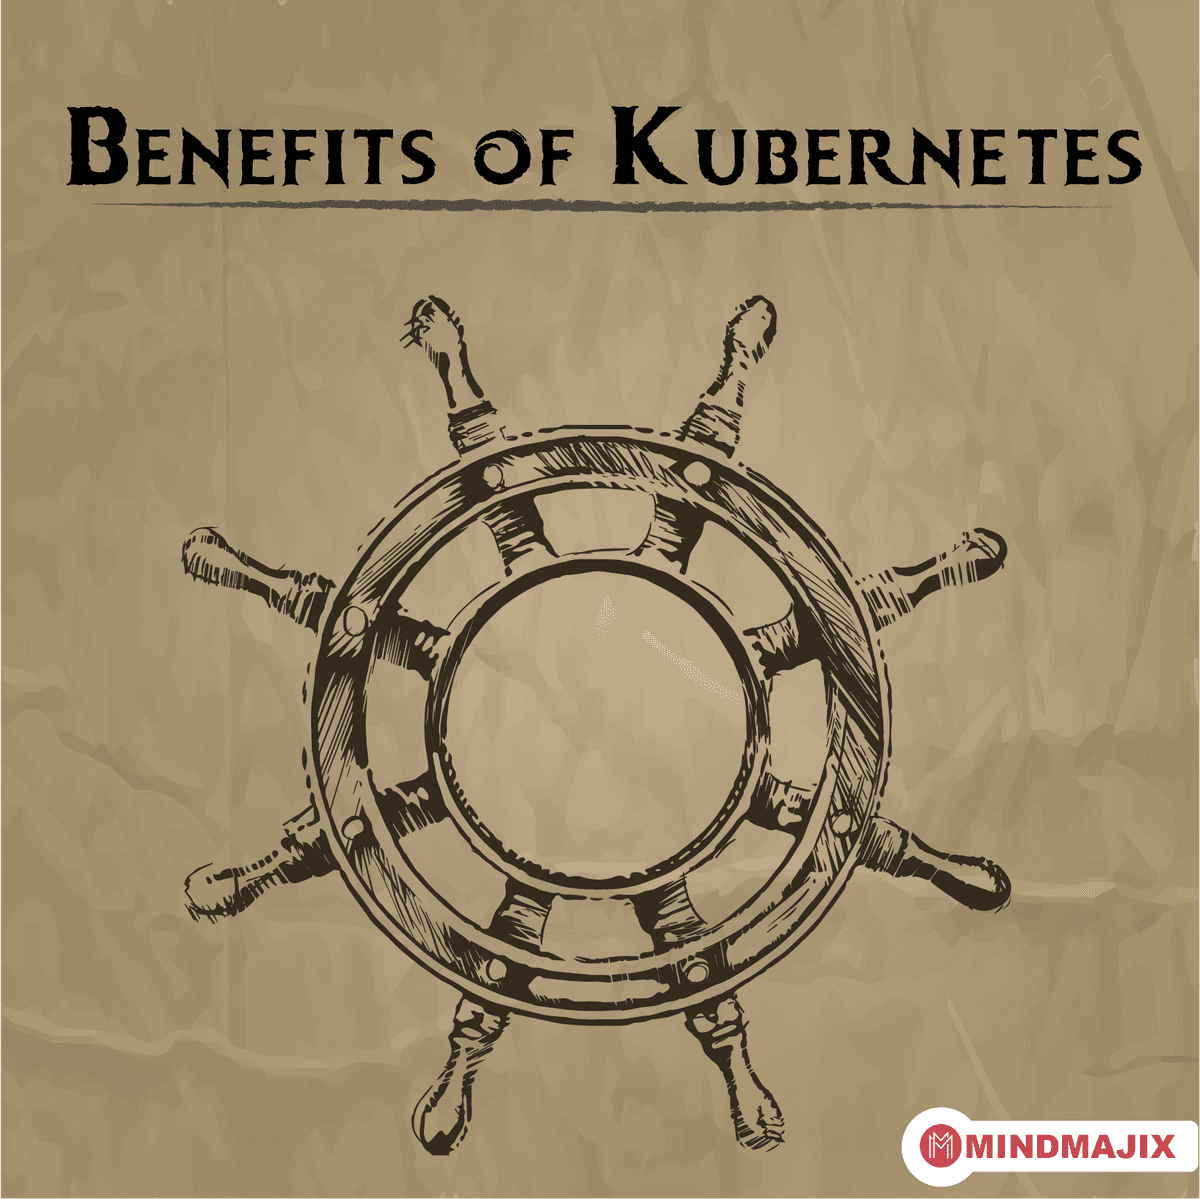 Benefits of Kubernetes